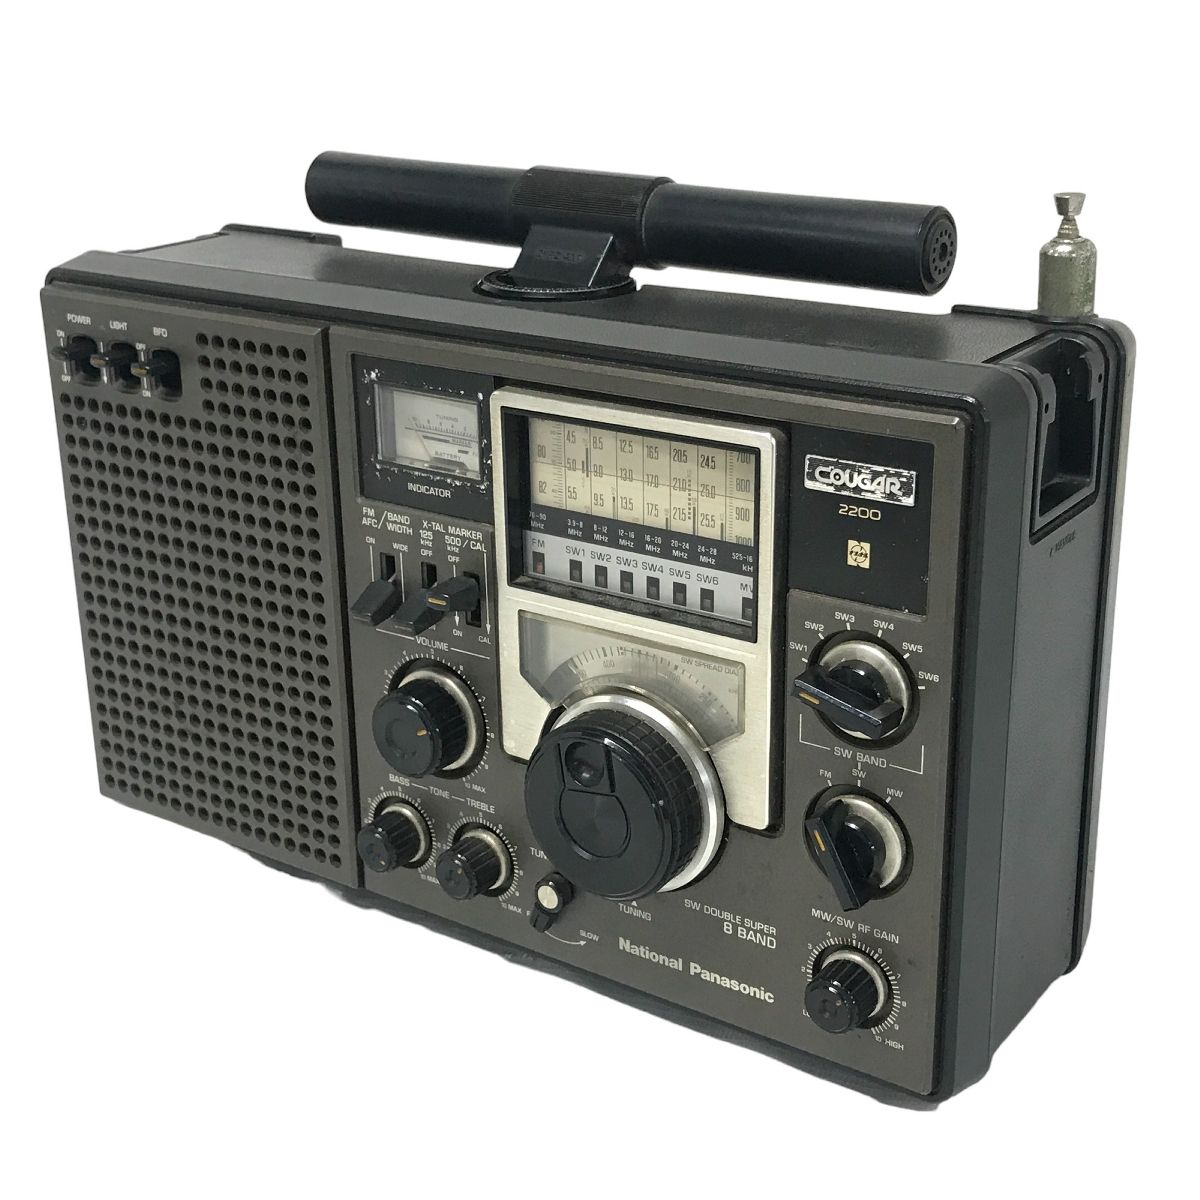 National Panasonic COUGAR 2200 RF-2200 ラジオ マルチバンド 